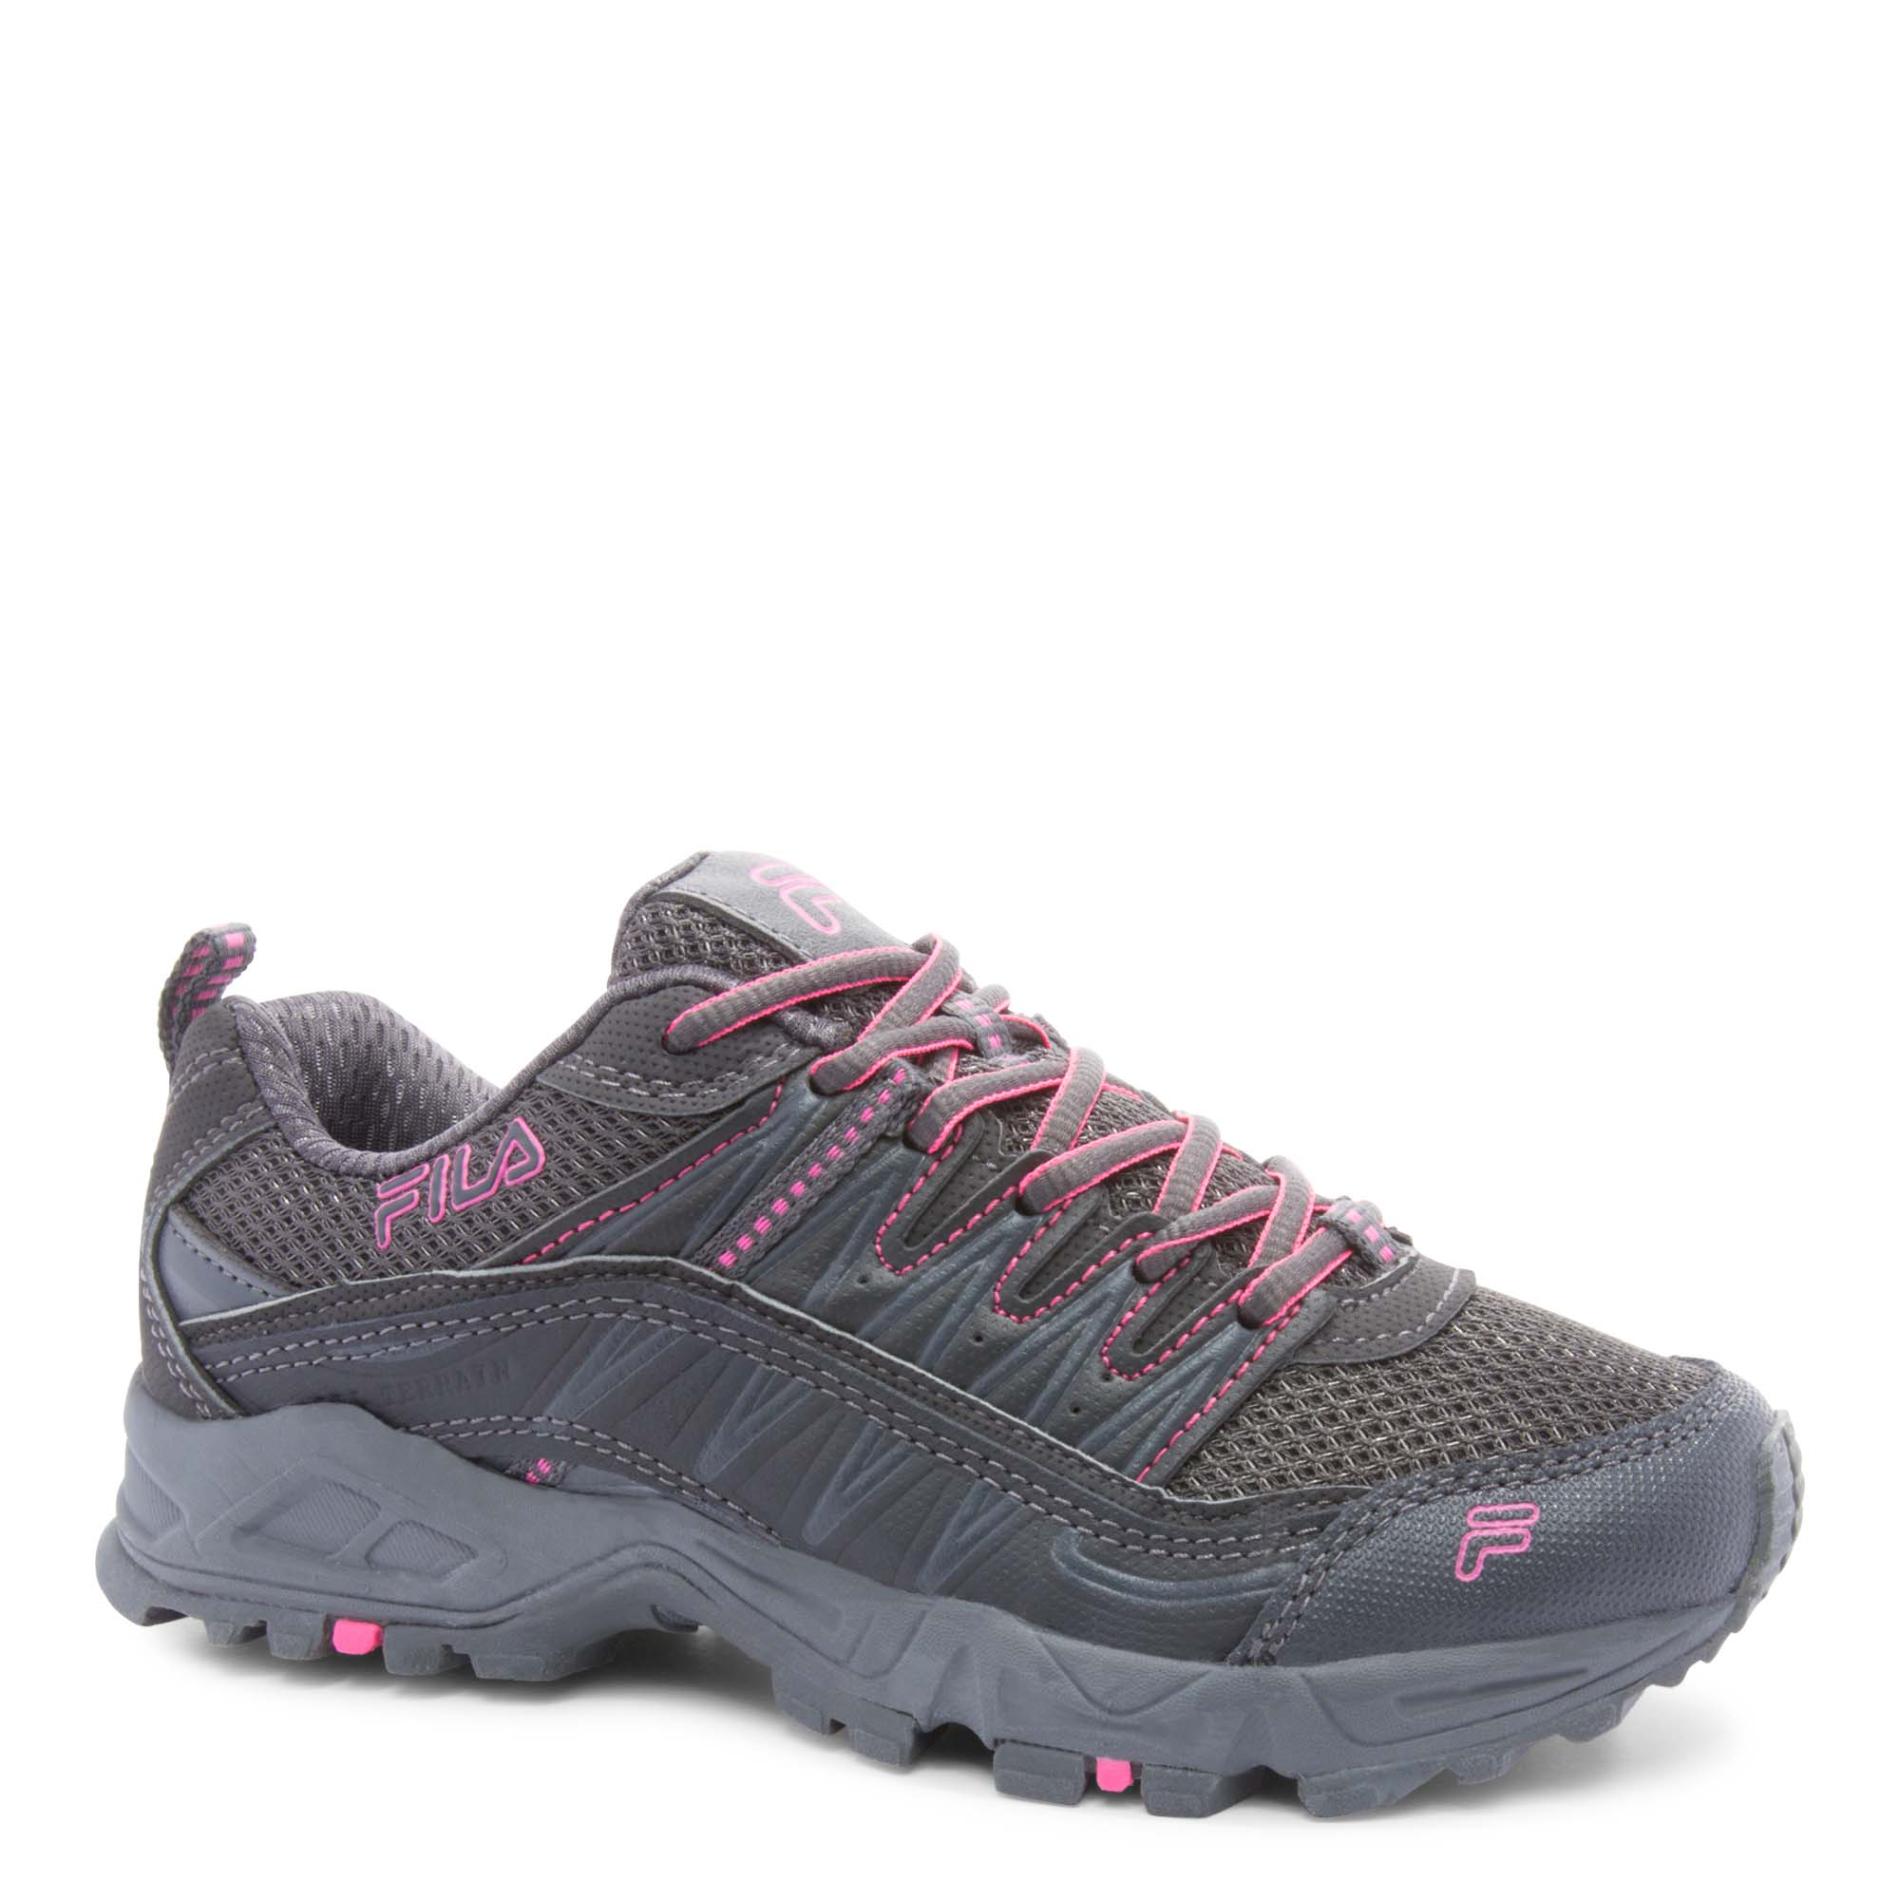 Fila Women's Peake Athletic Shoe - Gray/Pink